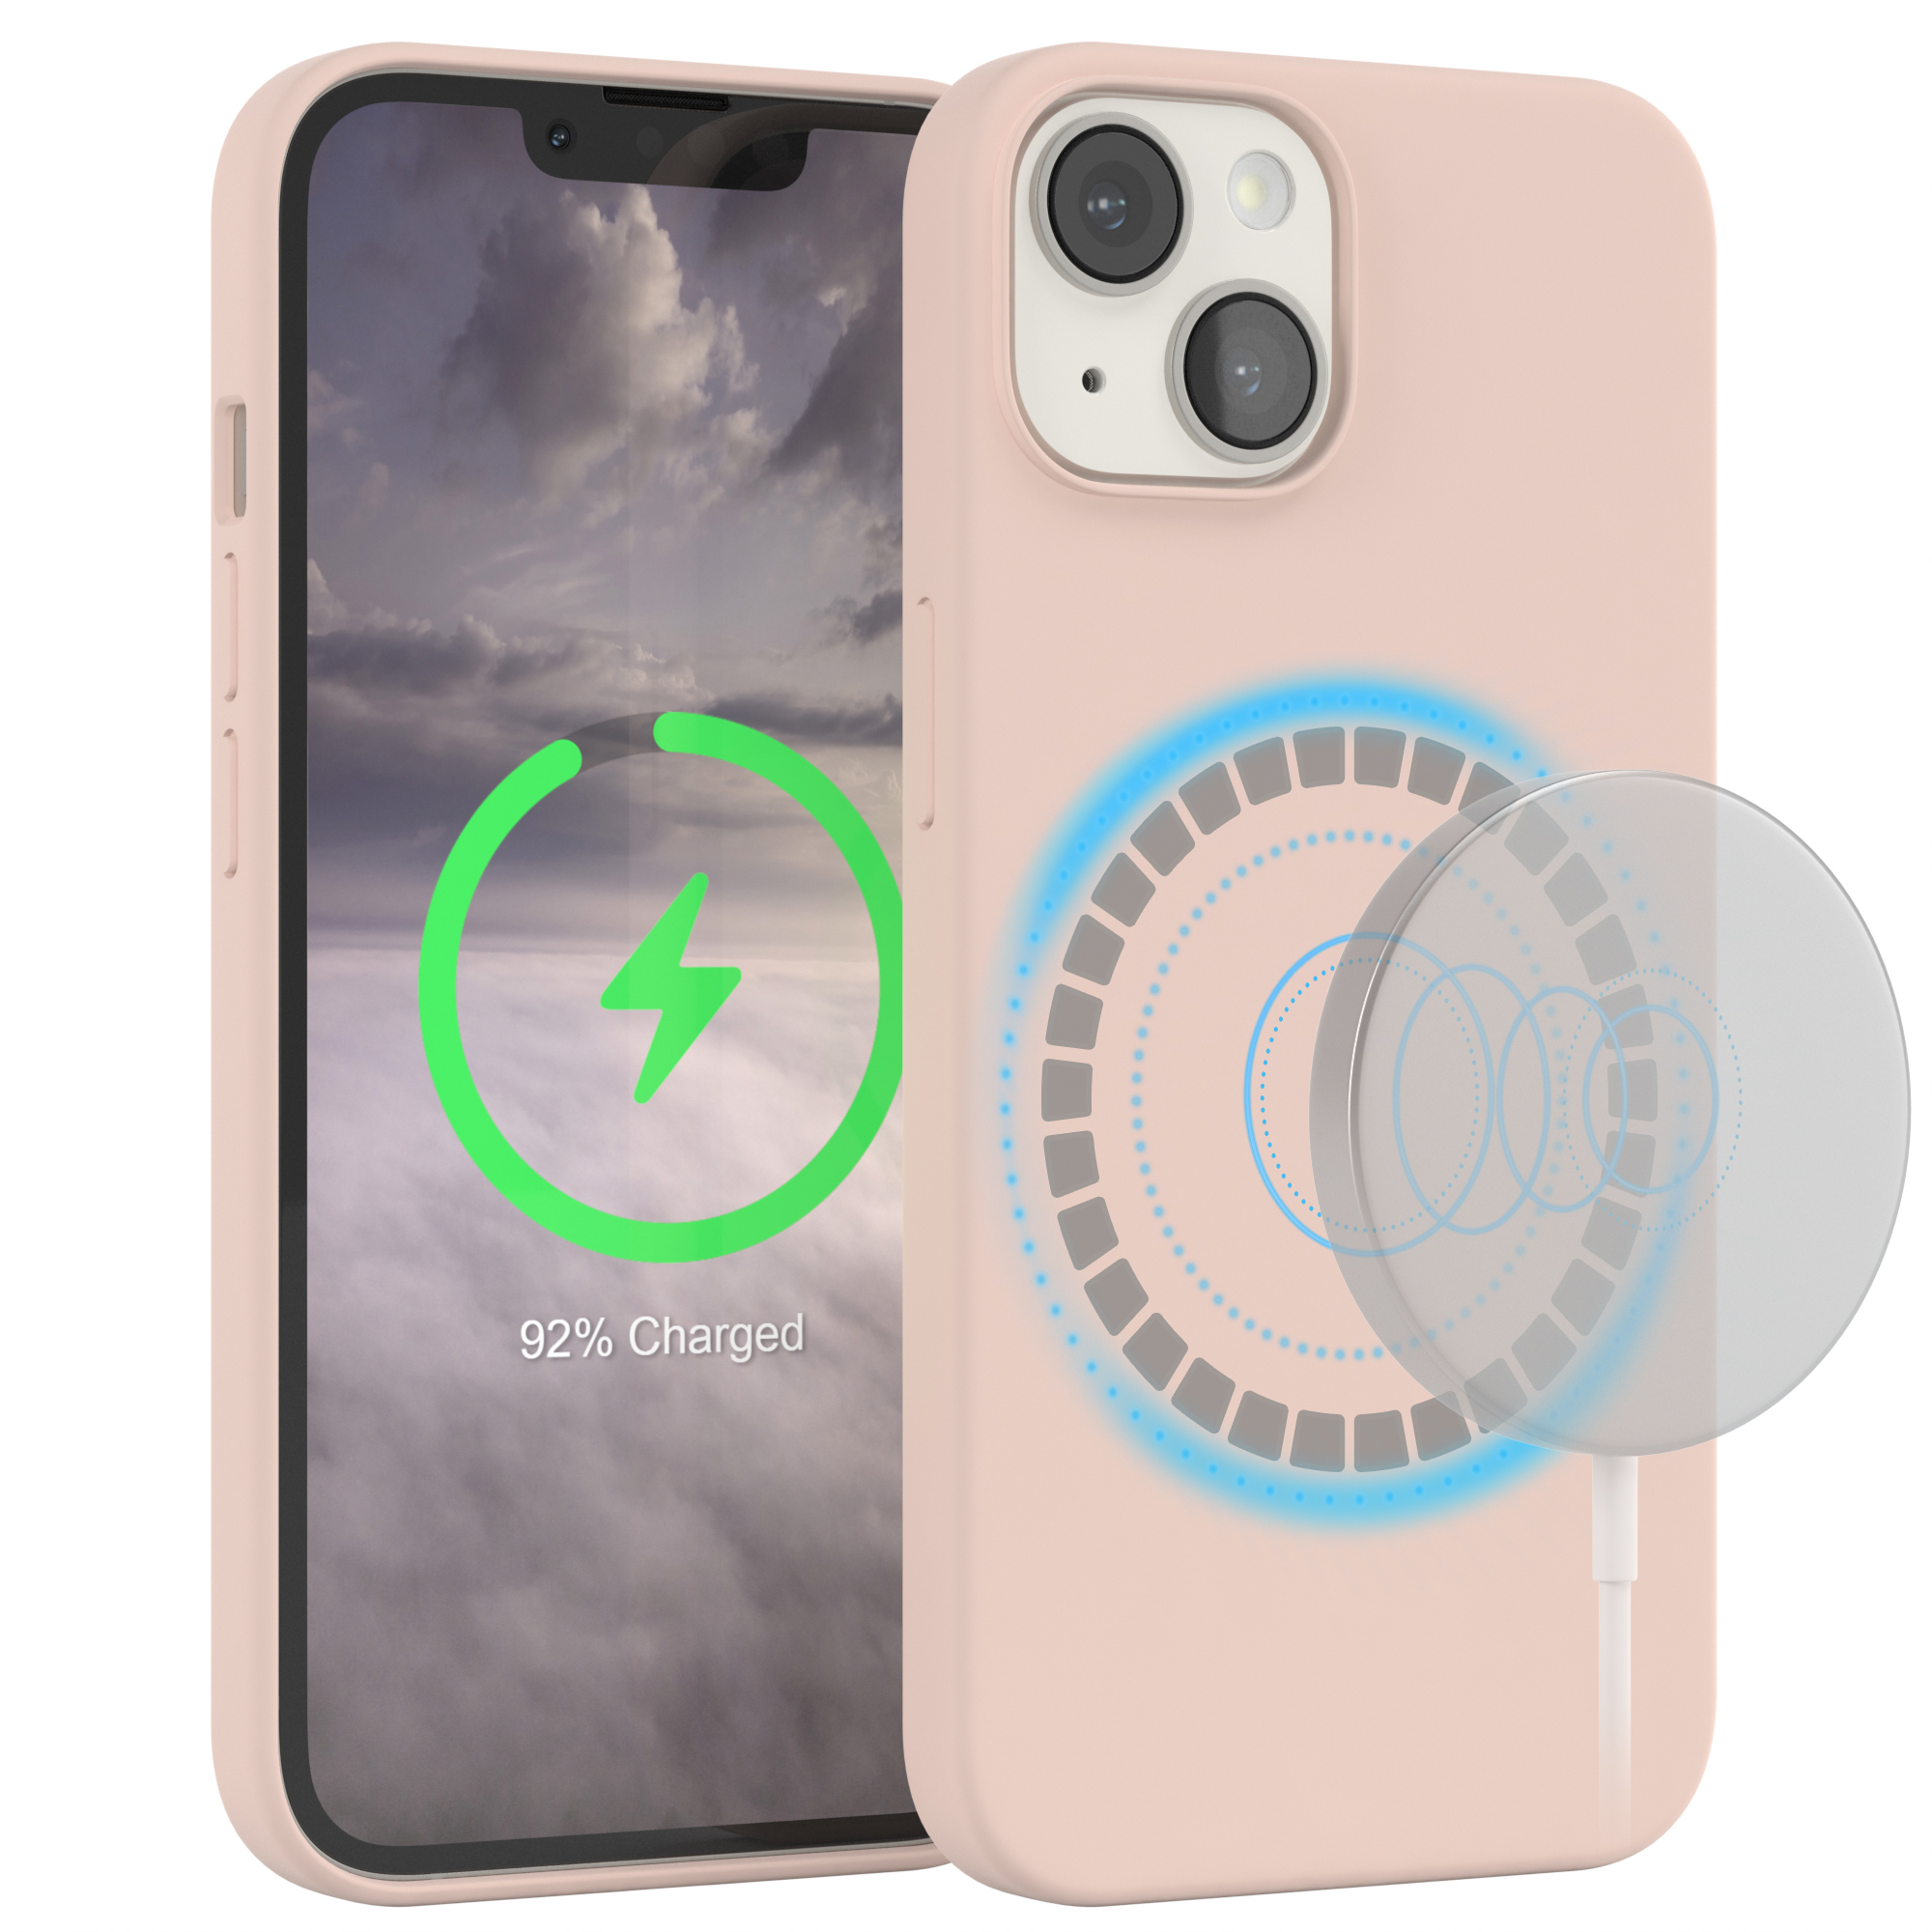 EAZY CASE Premium MagSafe, 14, mit Backcover, Silikon Apple, Rosa Braun Handycase iPhone